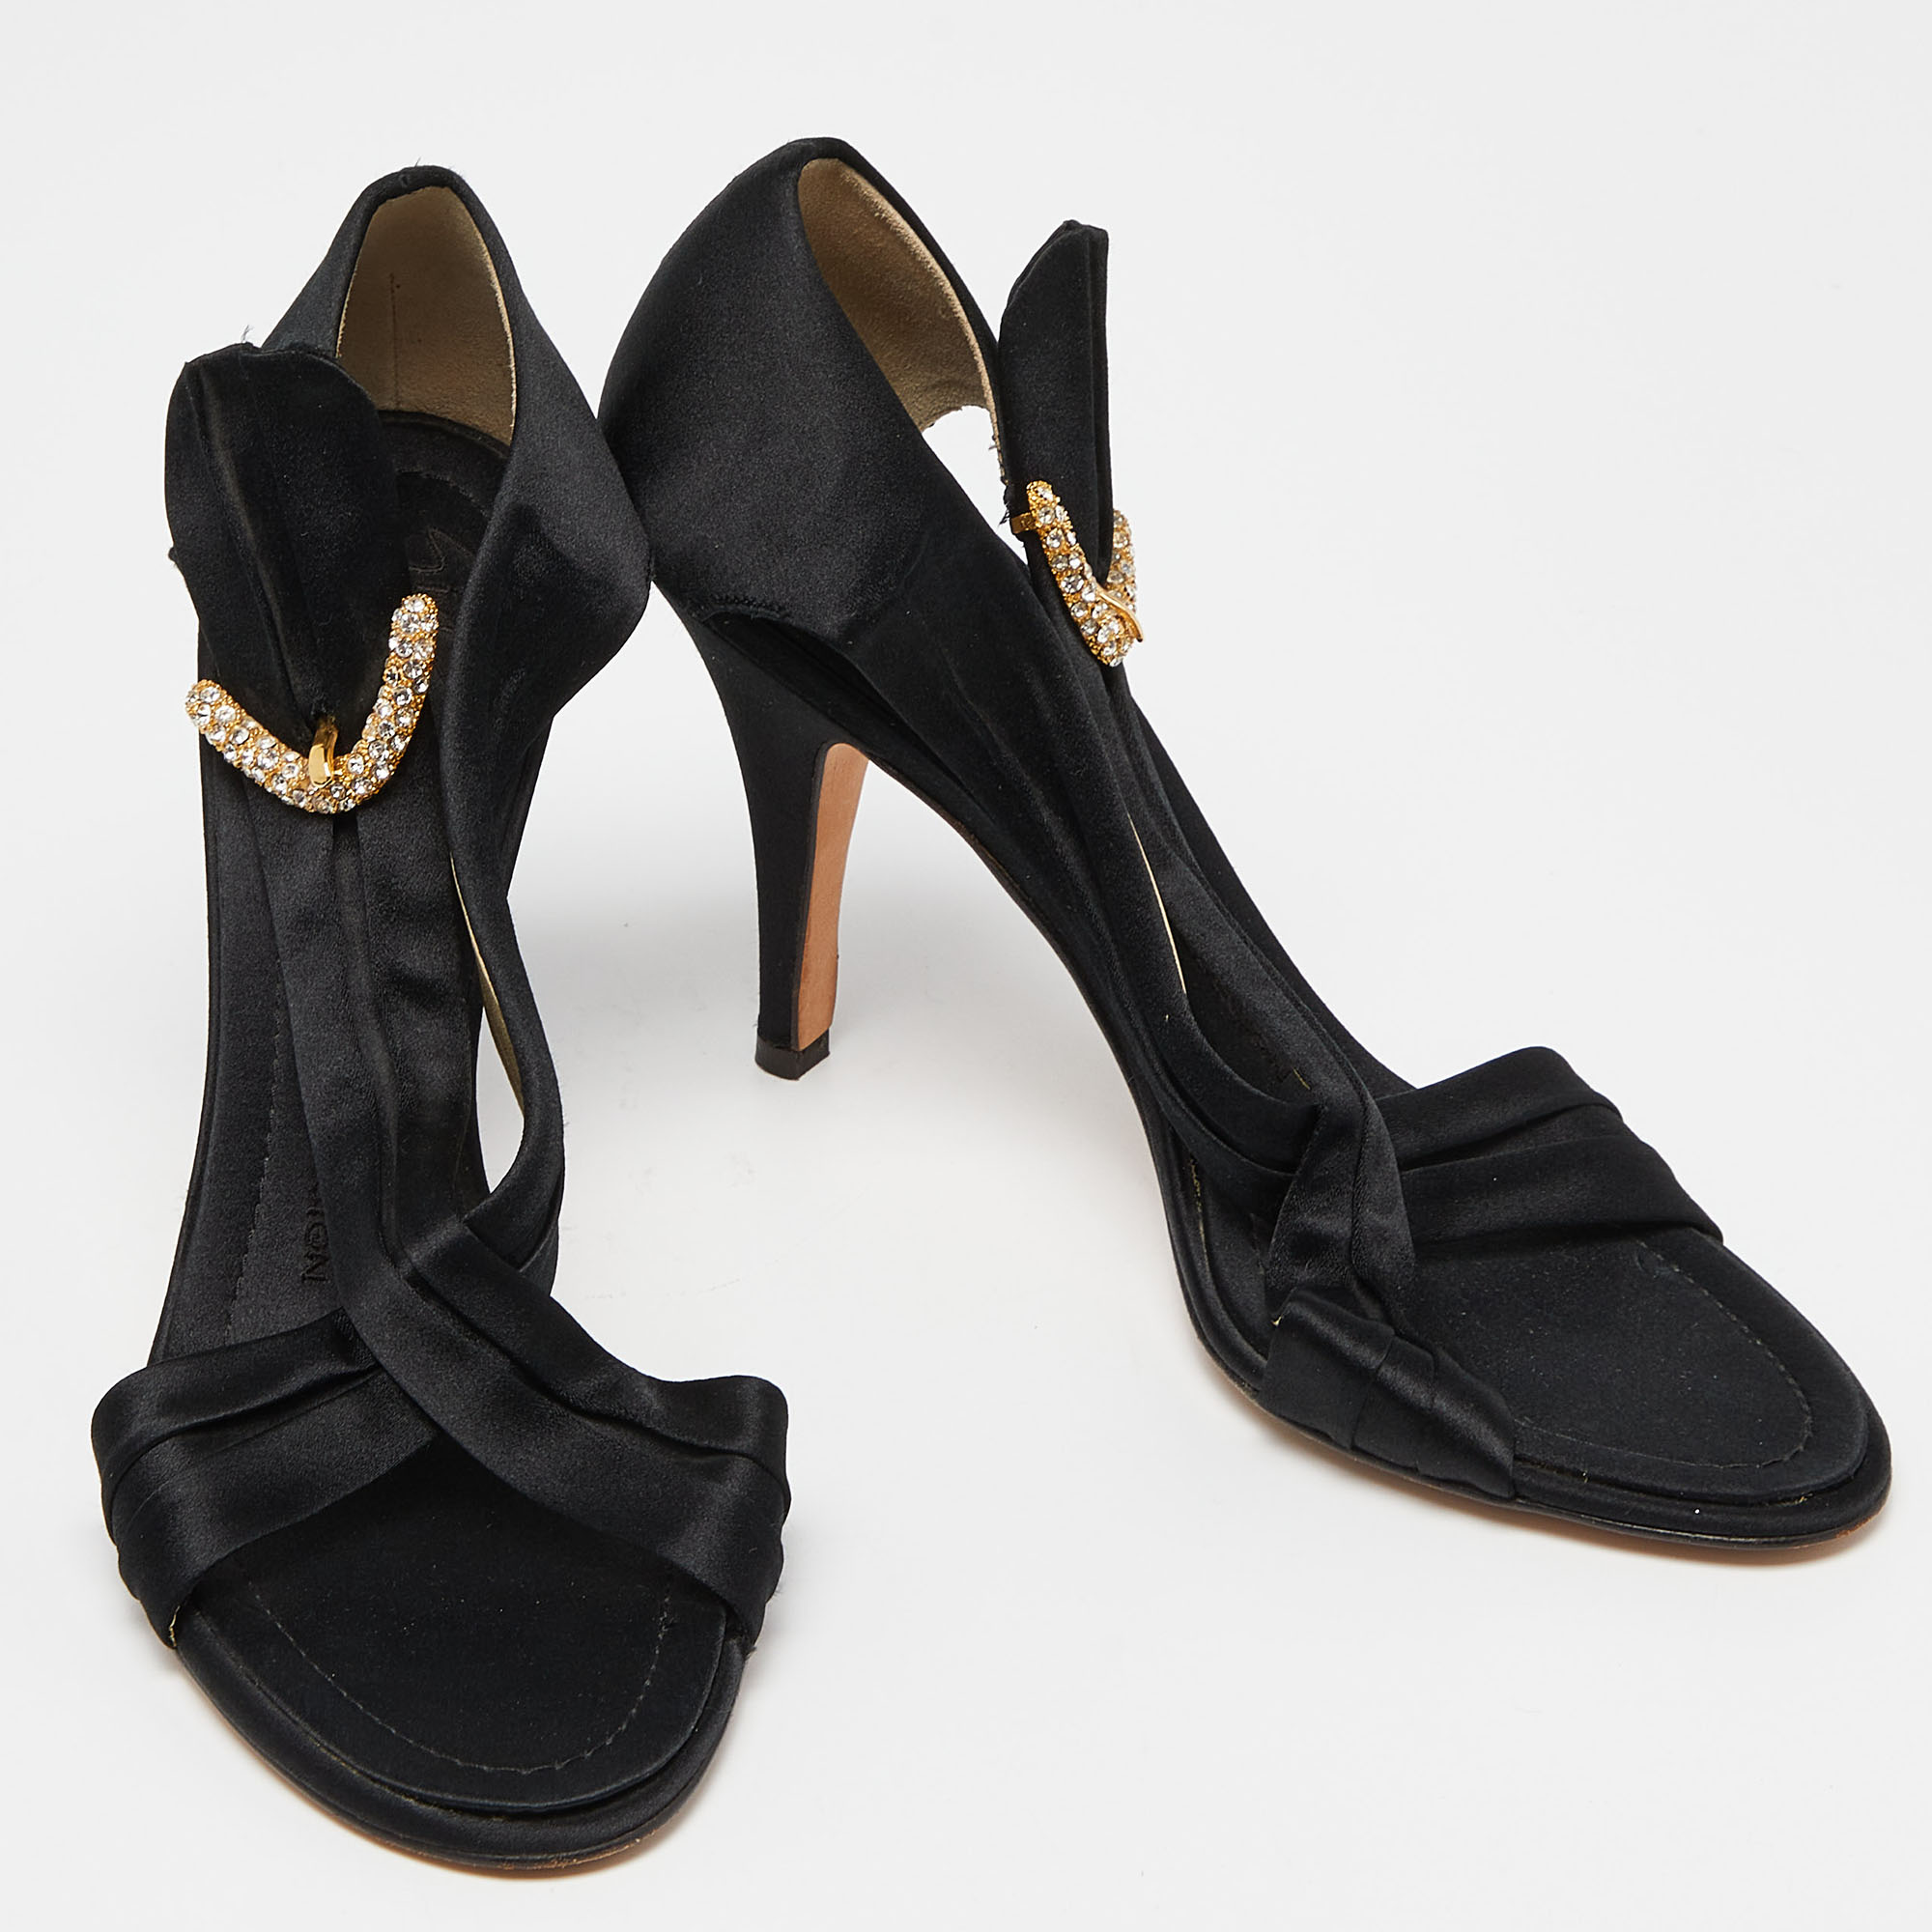 Giuseppe Zanotti Black Satin Crystal Embellished Sandals Size 38